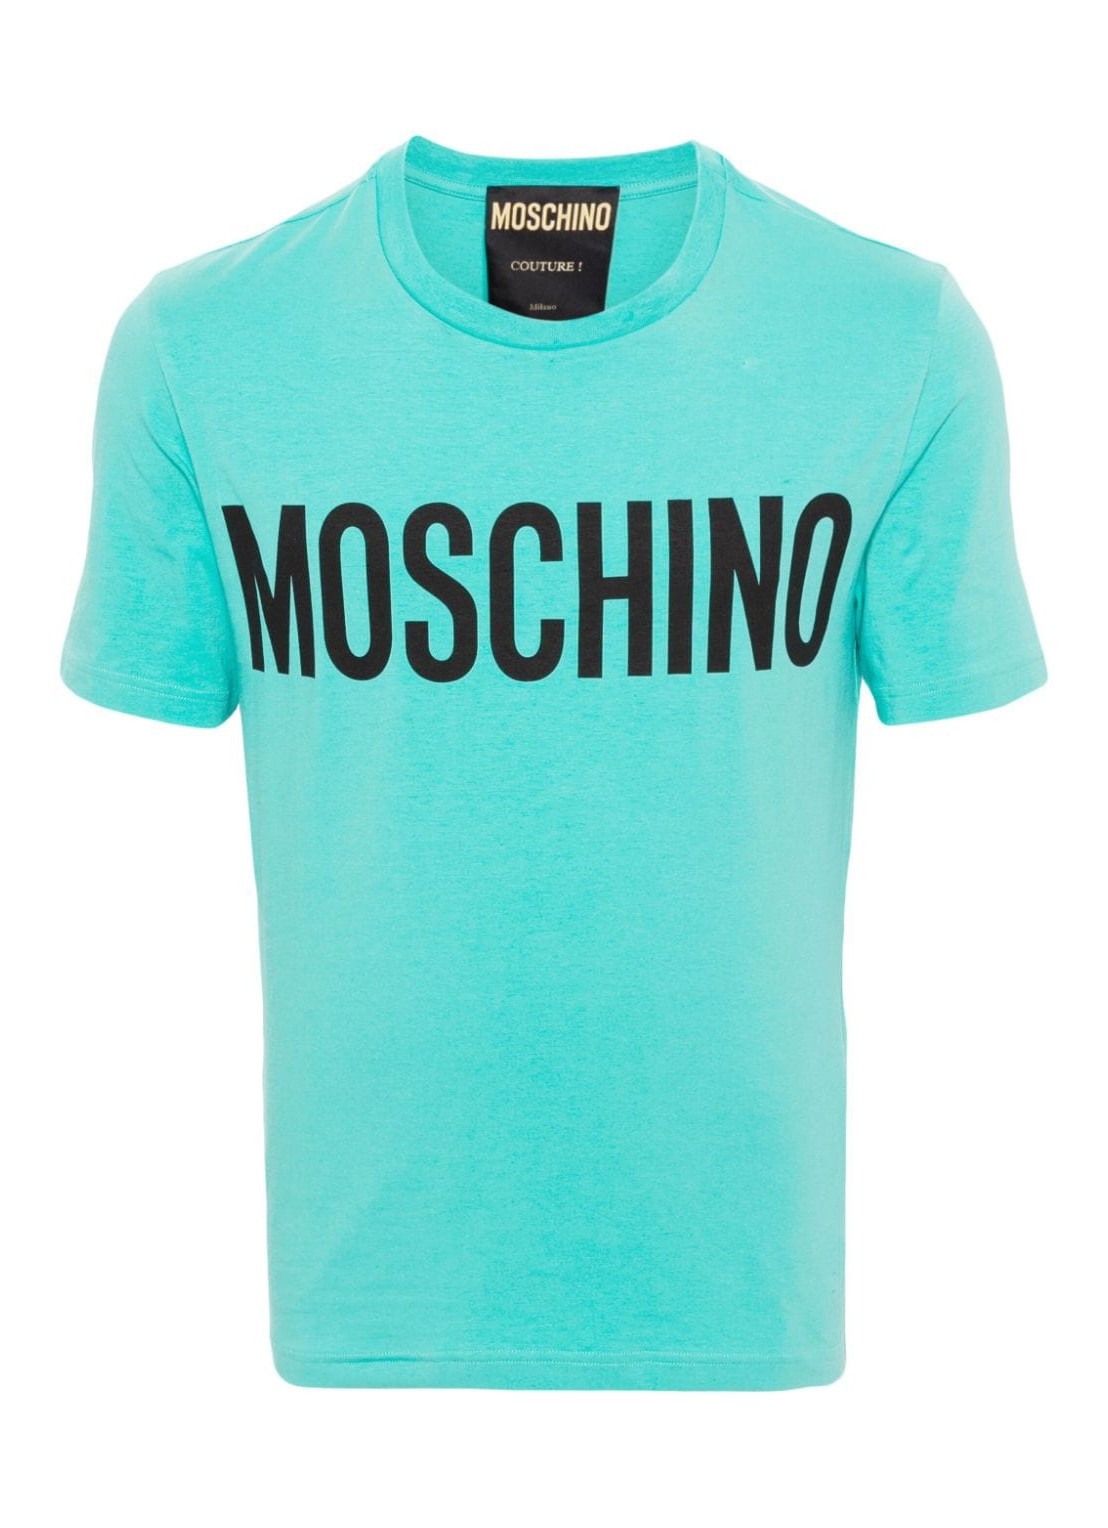 Camiseta moschino couture t-shirt man stretch cotton jersey 07022039 a1365 talla verde
 